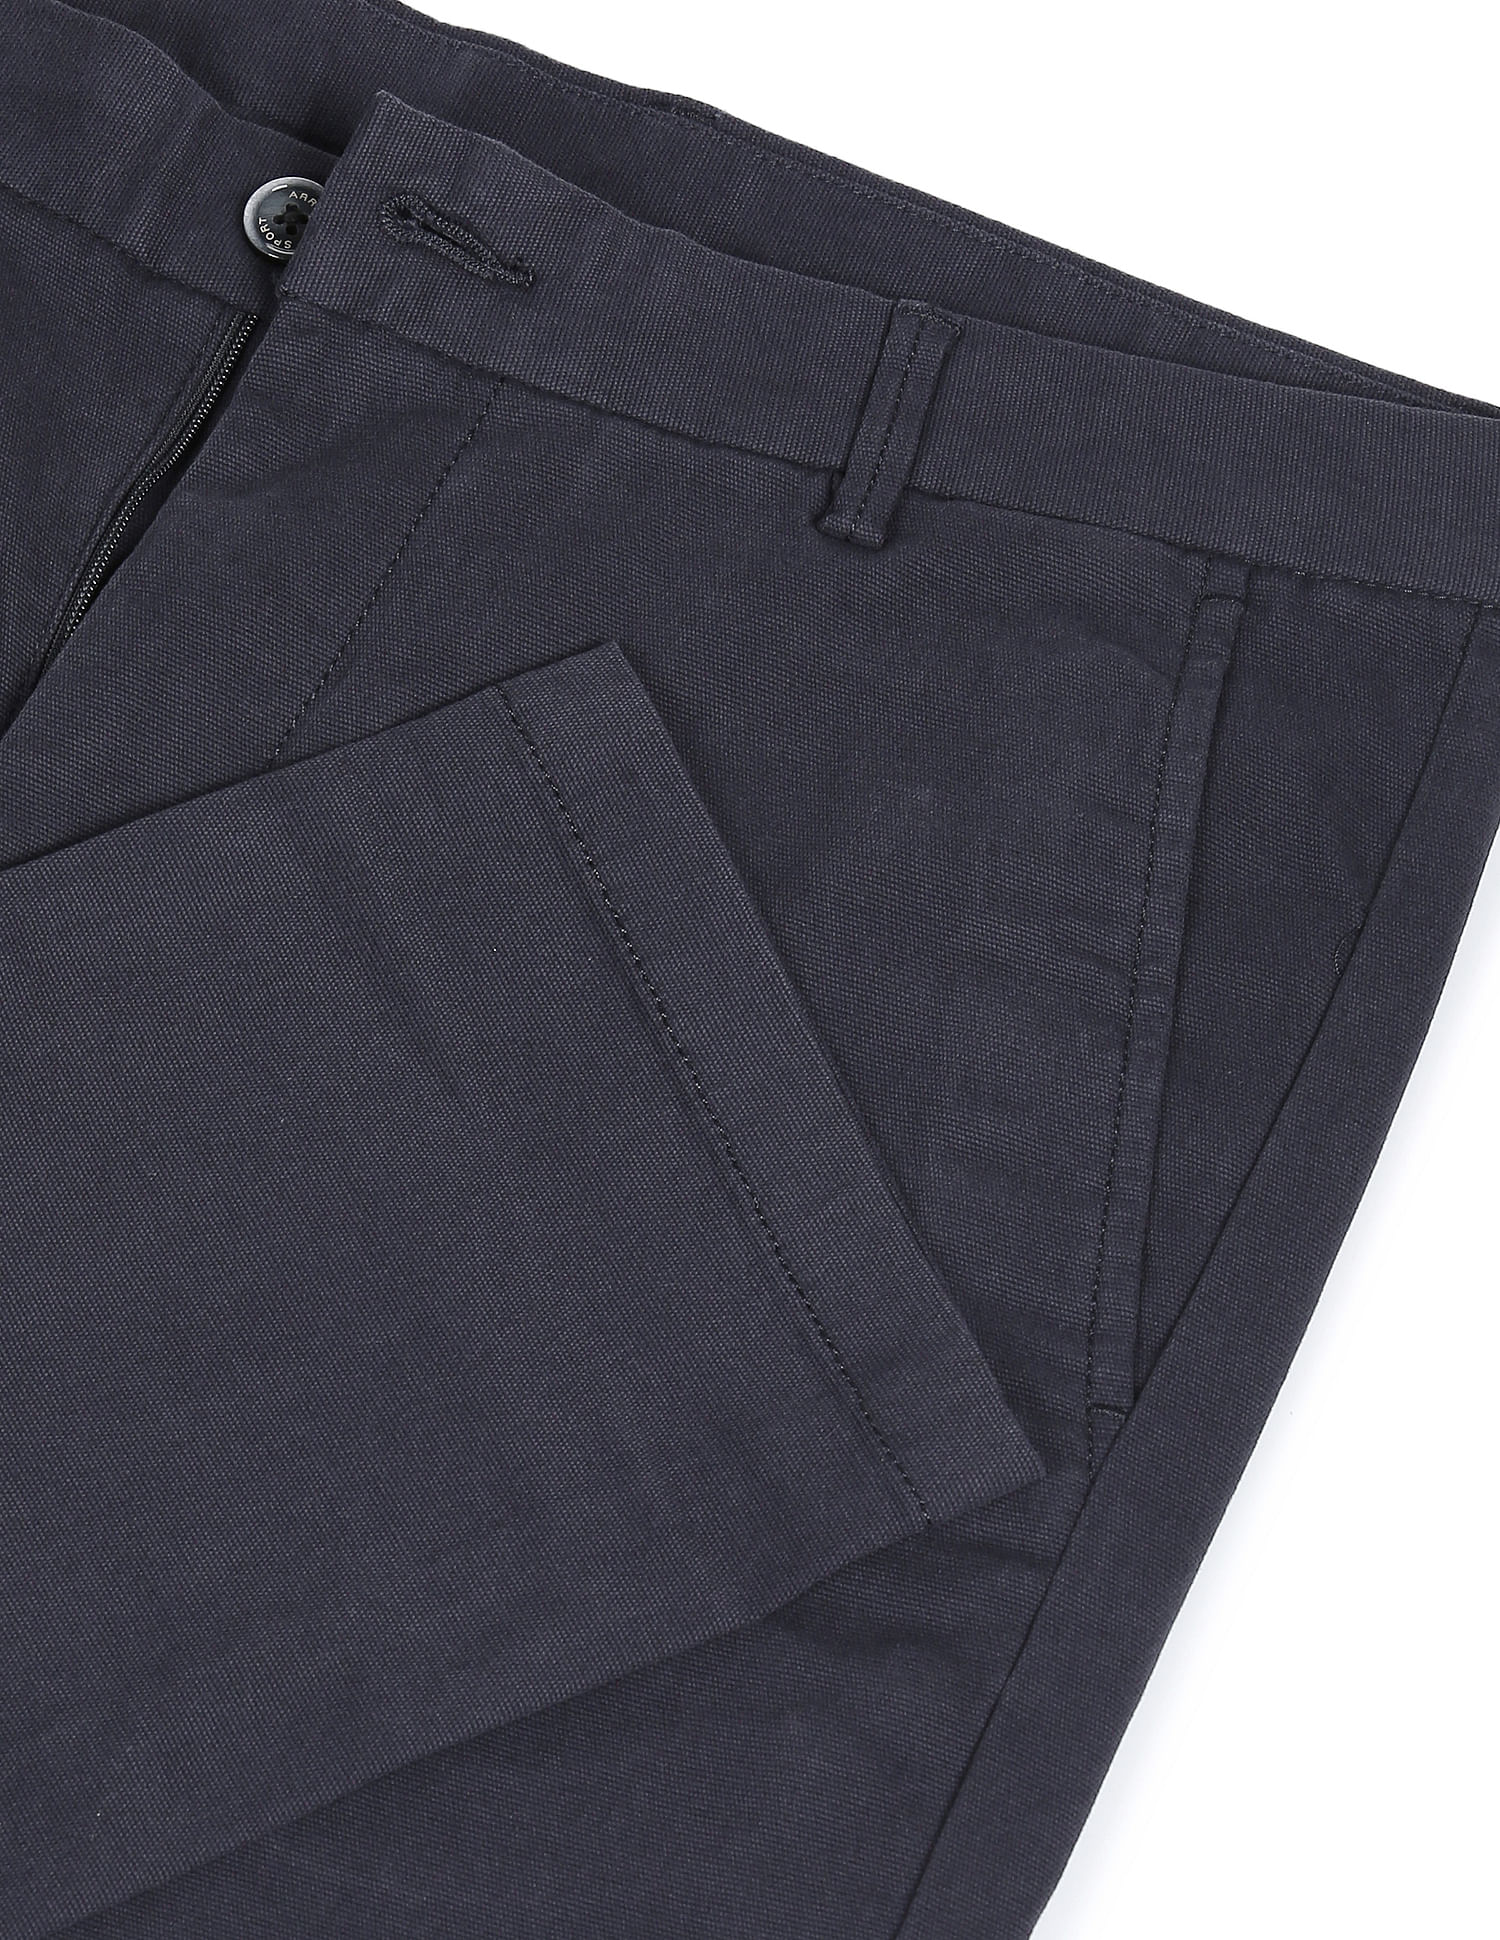 Men's Retro British Wool Herringbone Casual Pants Loose Plaid trousers Plus  Size | eBay